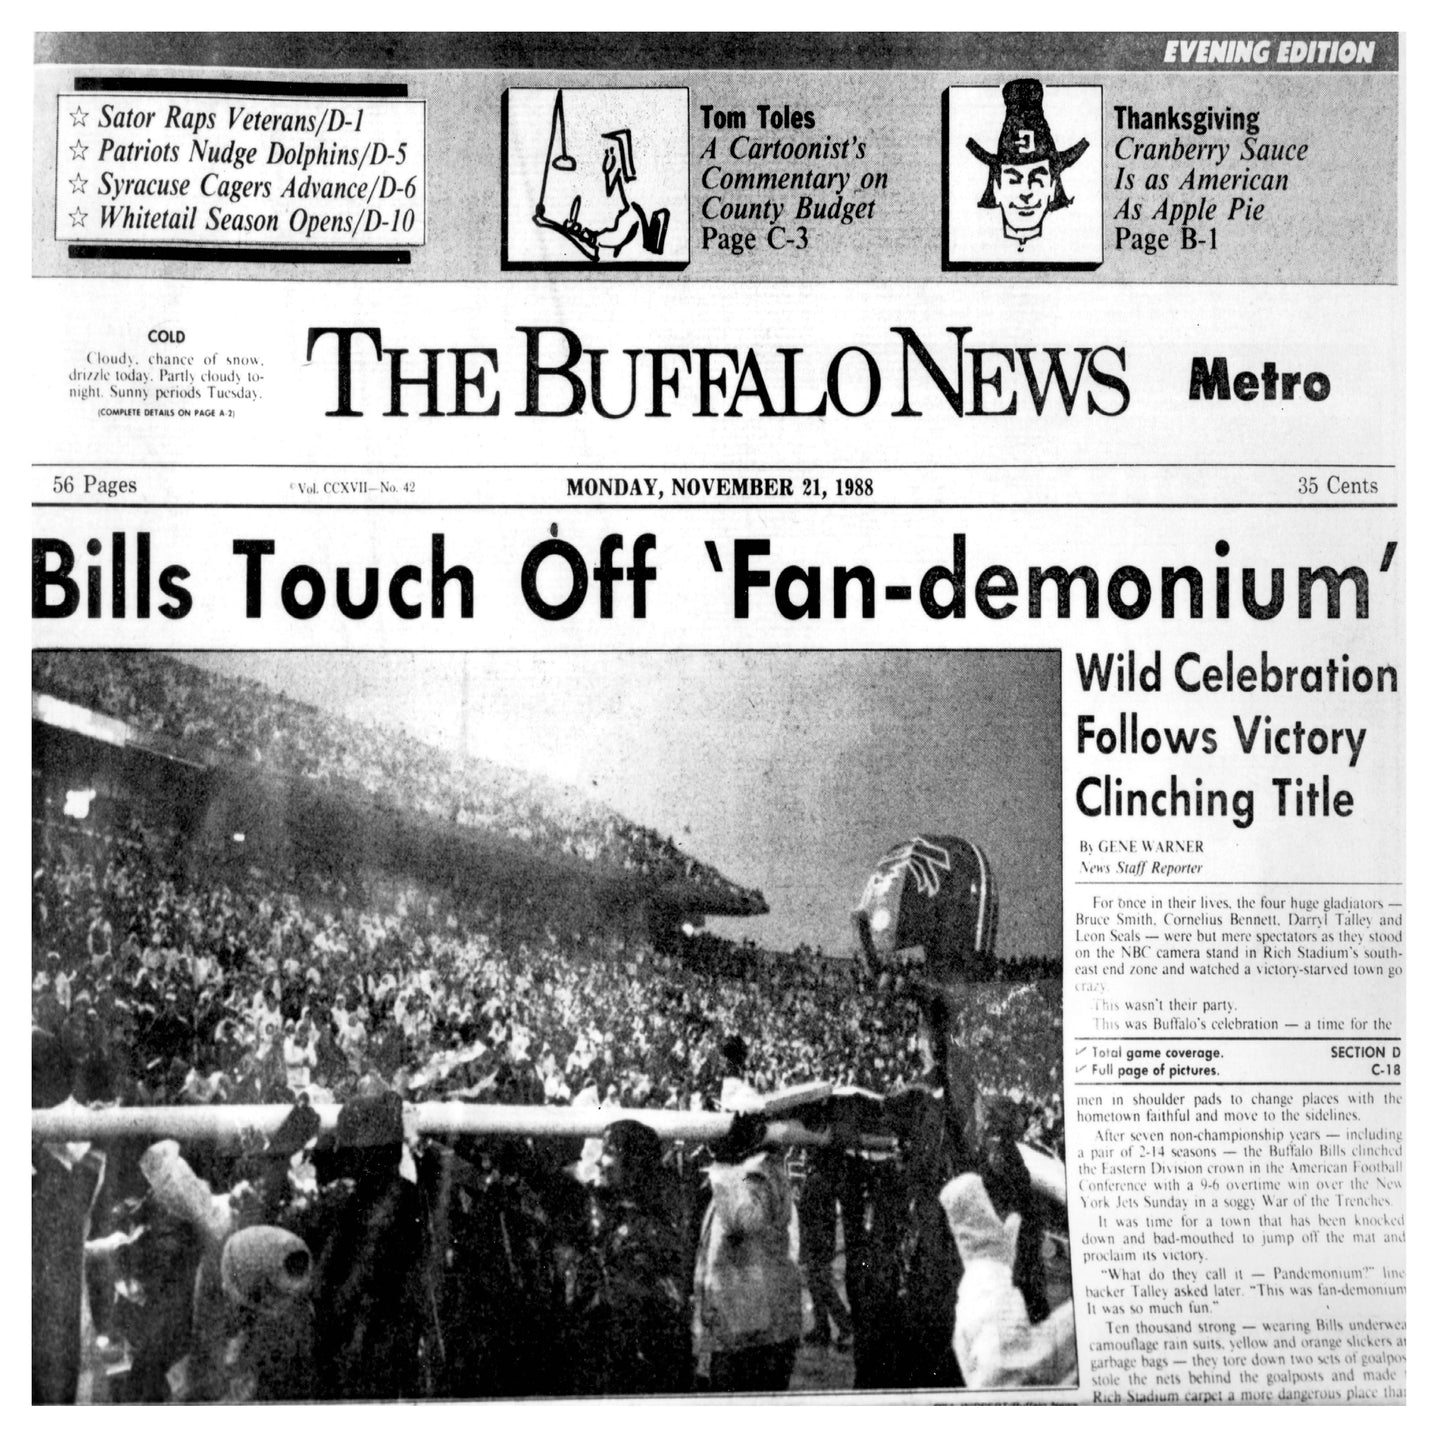 The Buffalo News Front Page - Monday, November 21, 1988